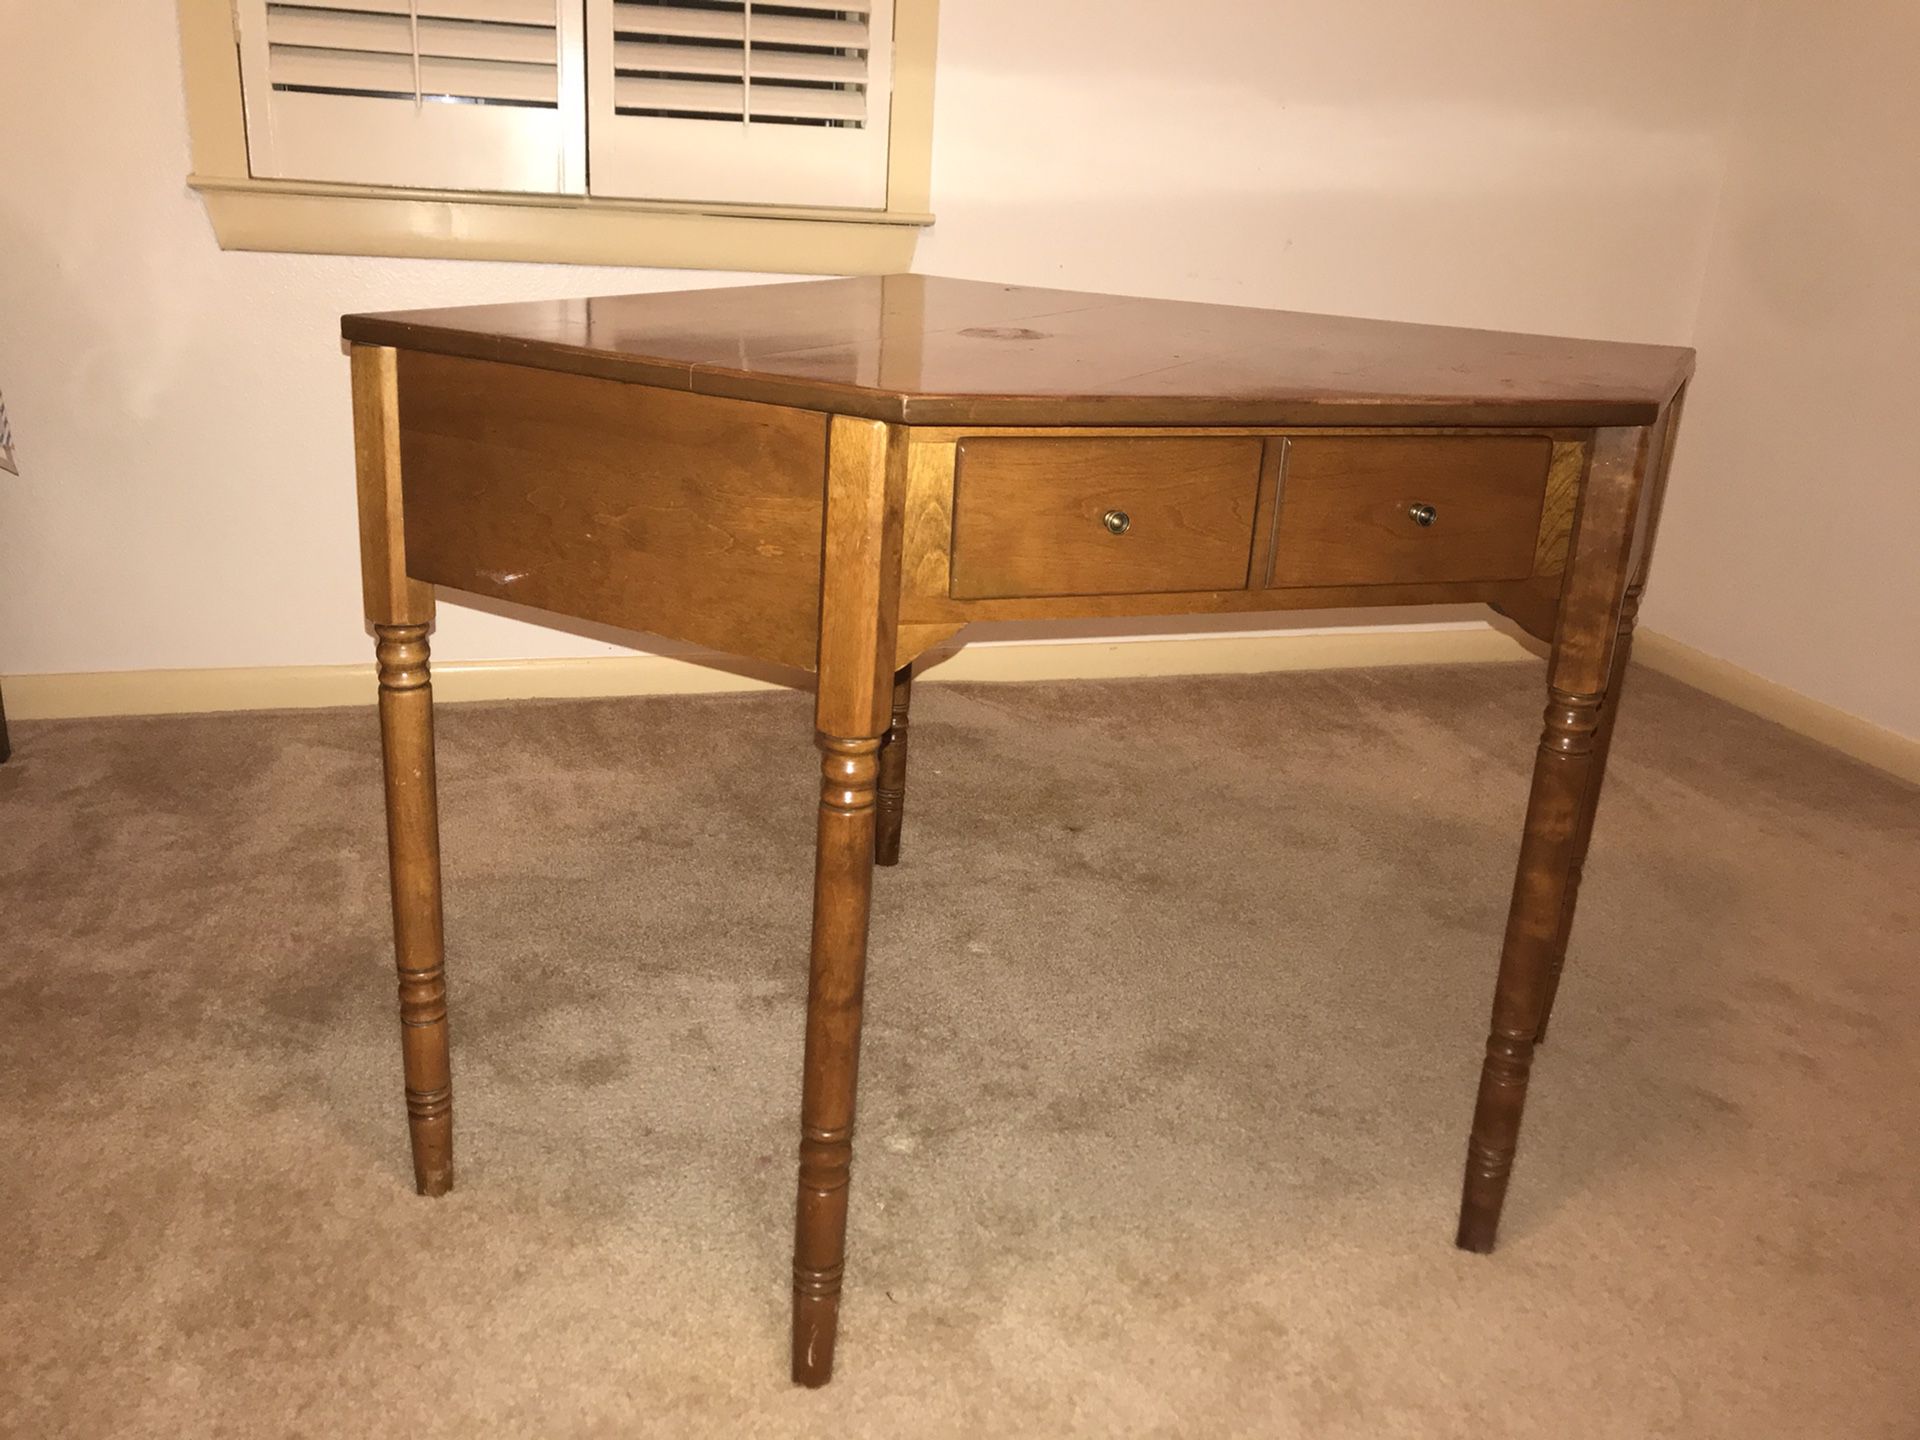 Ethan Allen antique wooden corner desk/ table